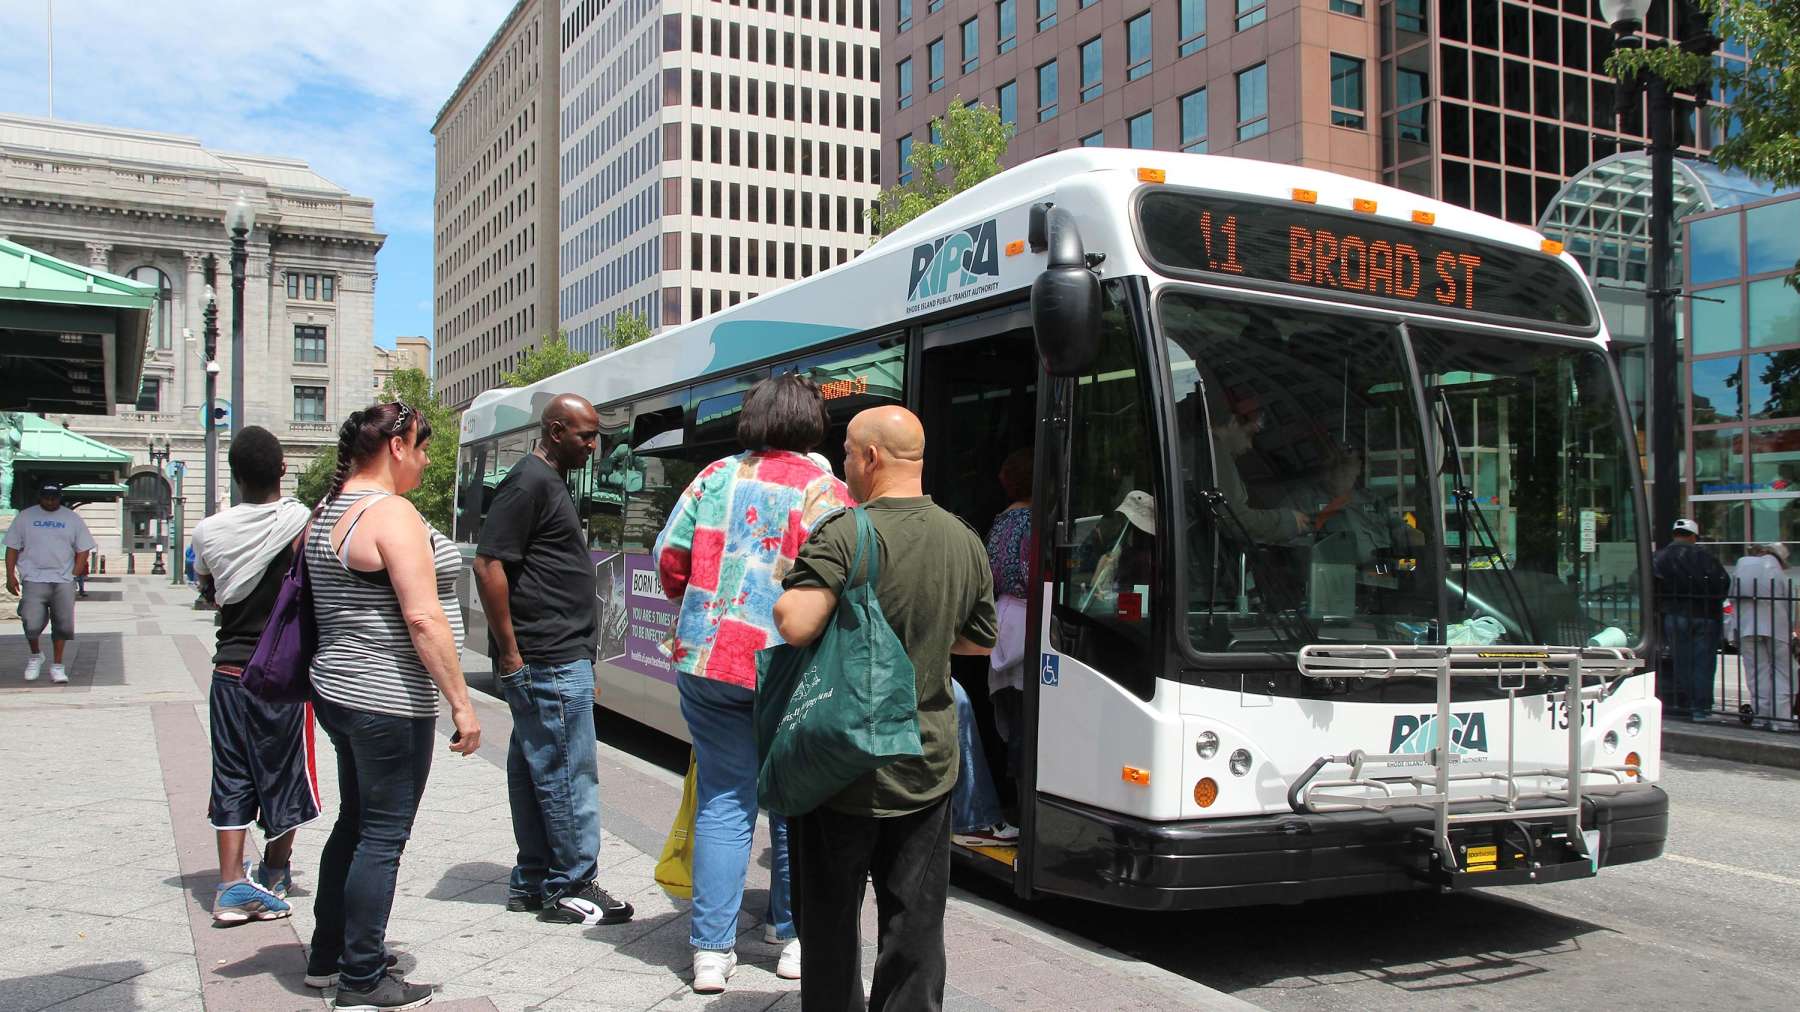 RI Transit Riders opposes RIDOT’s latest “transit improvement” plan for downtown Providence